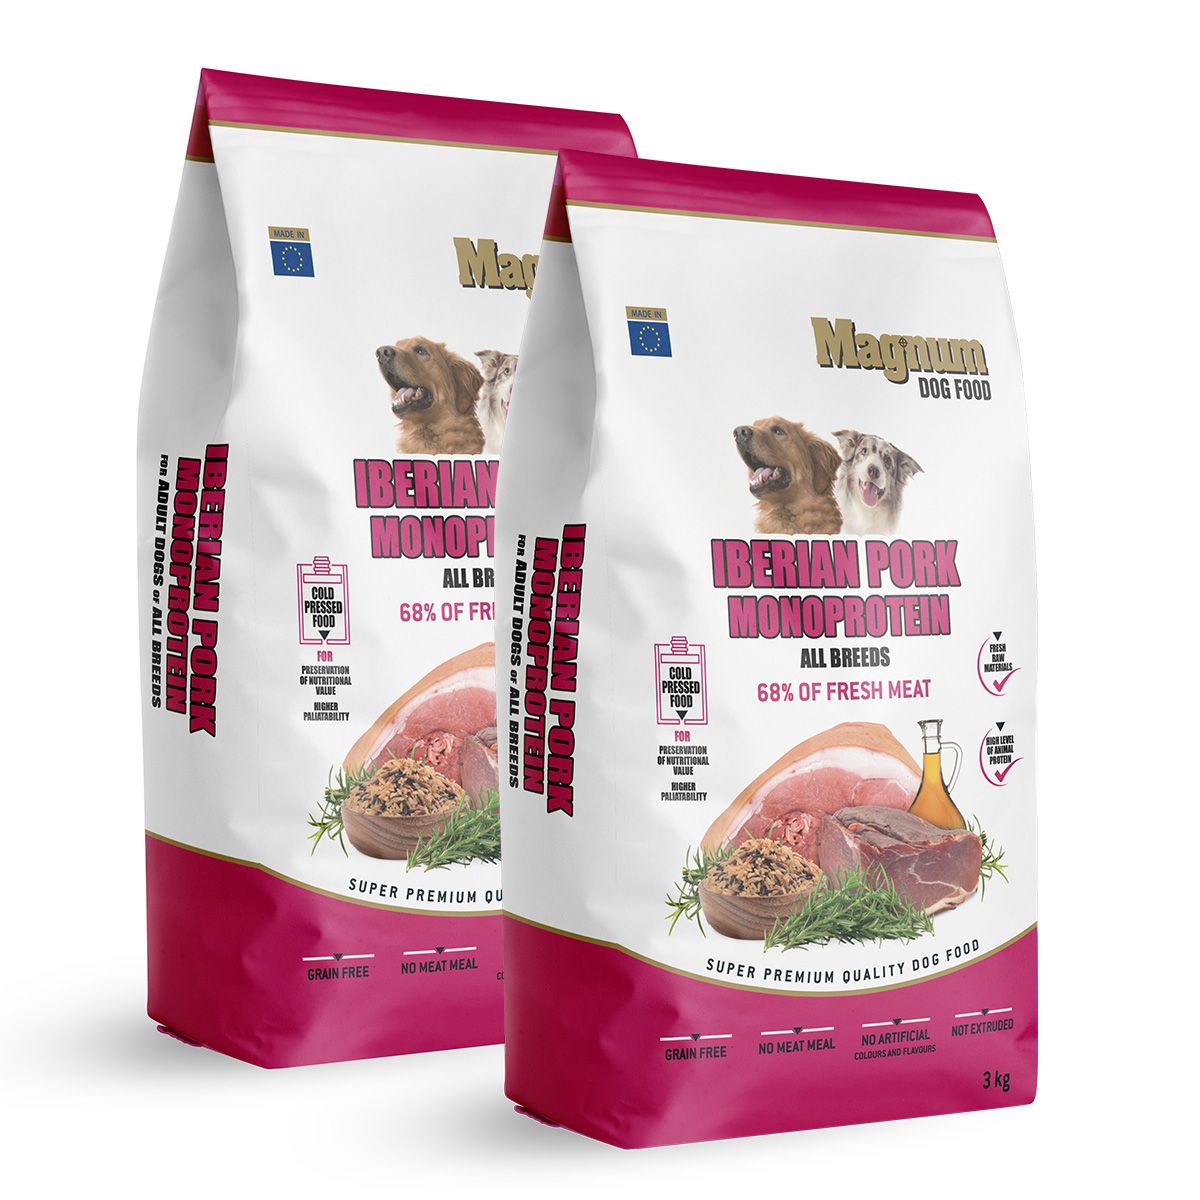 Magnum Iberian Pork & Monoprotein All Breed 2x3kg Magnum dog food